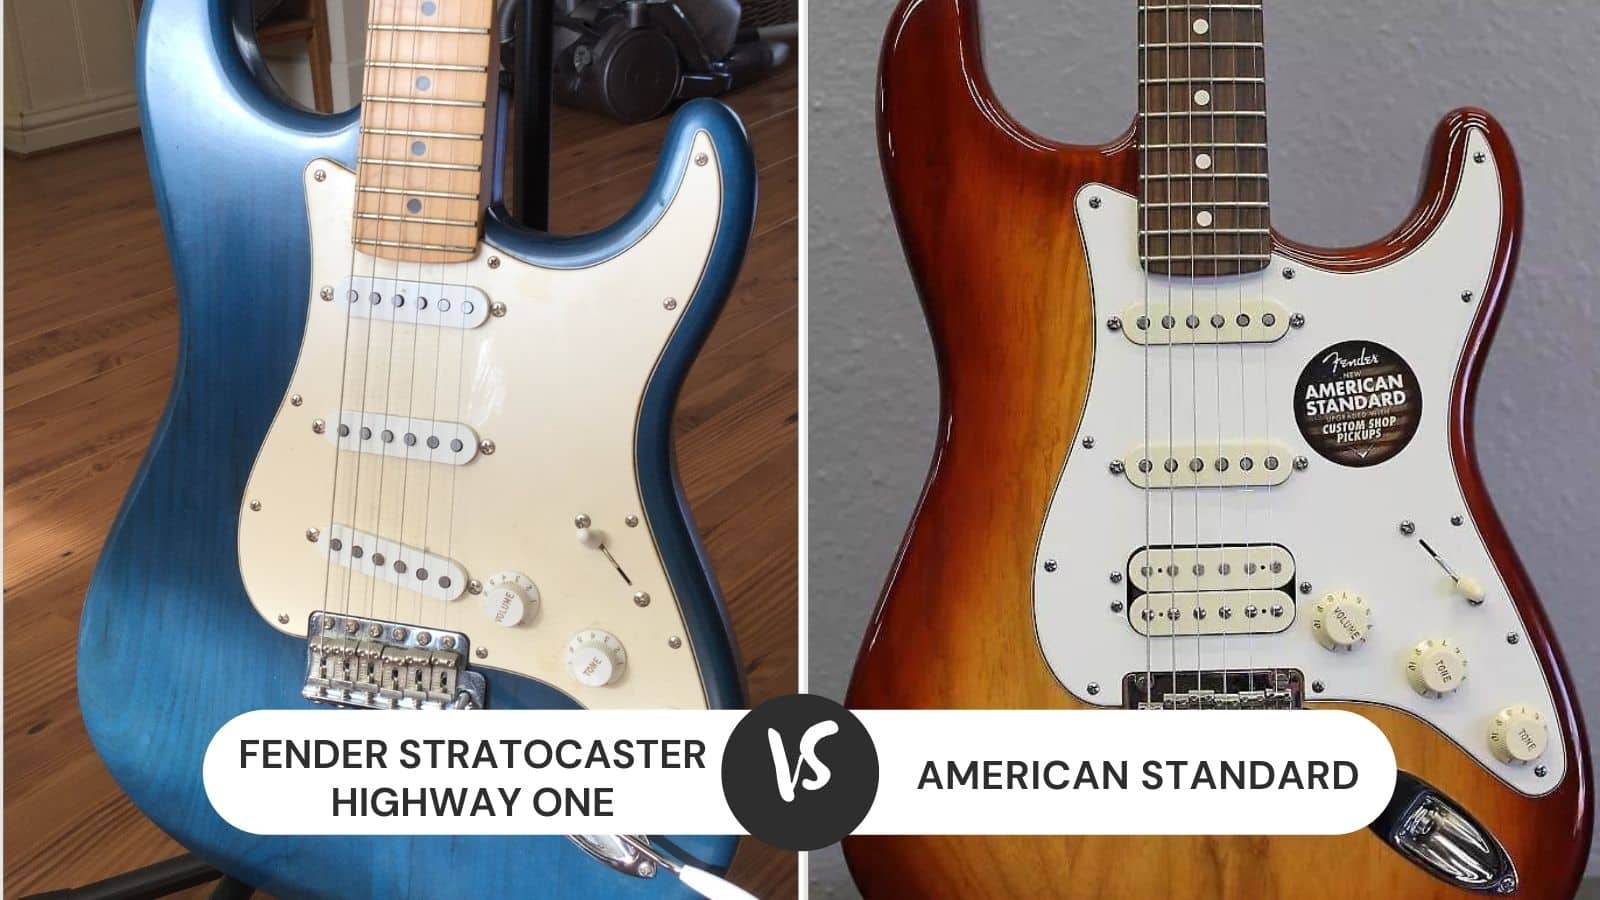 Fender Stratocaster Highway One vs American Standard